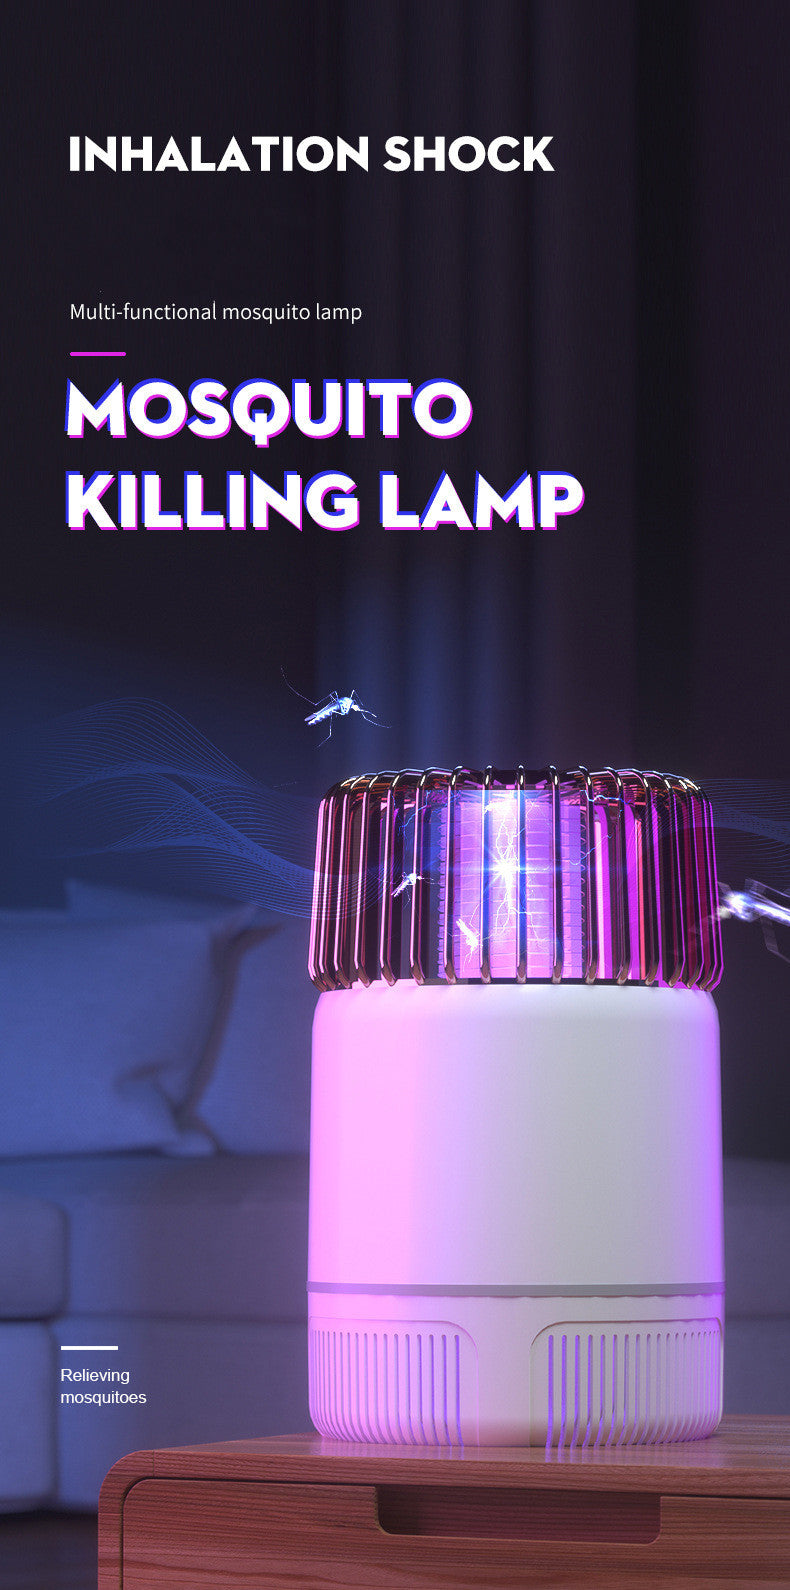 Electric Mosquito Killer Lamp - Trendytreasures